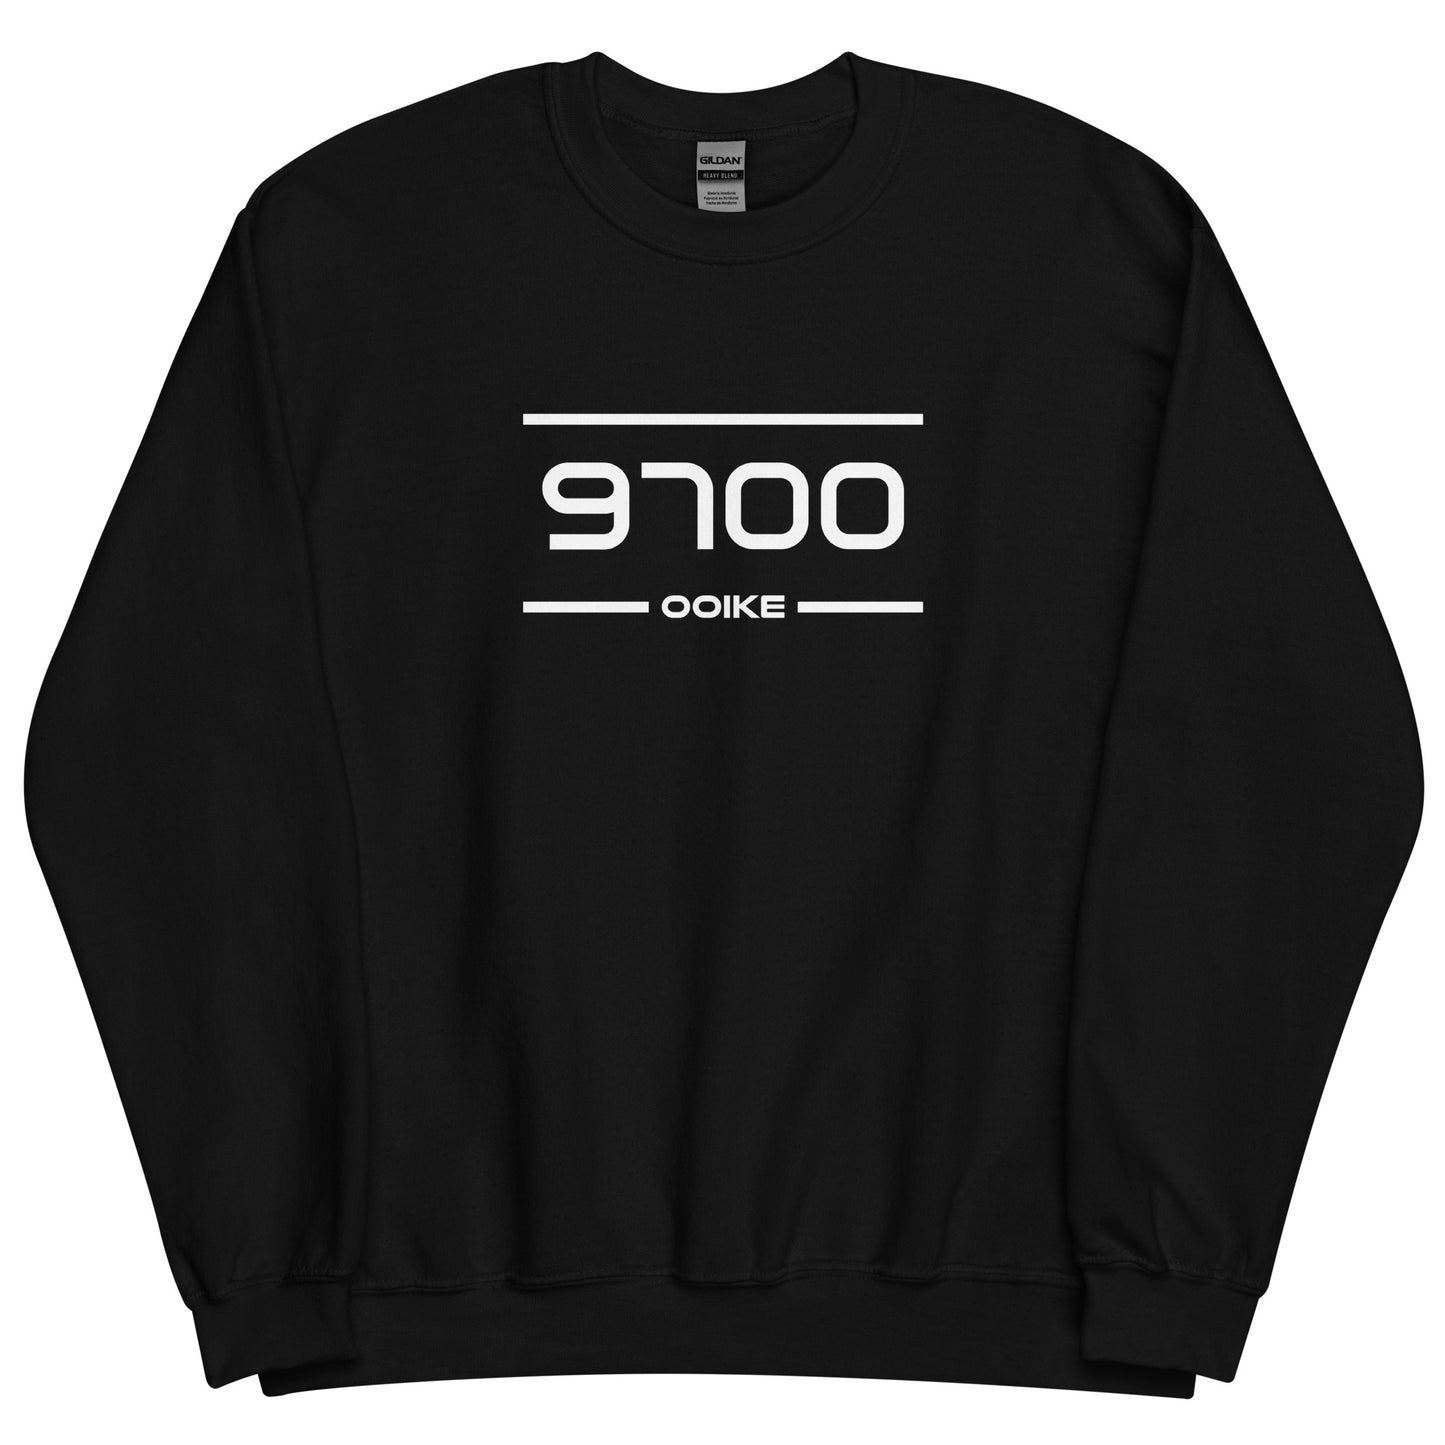 Sweater - 9700 - Ooike (M/V)